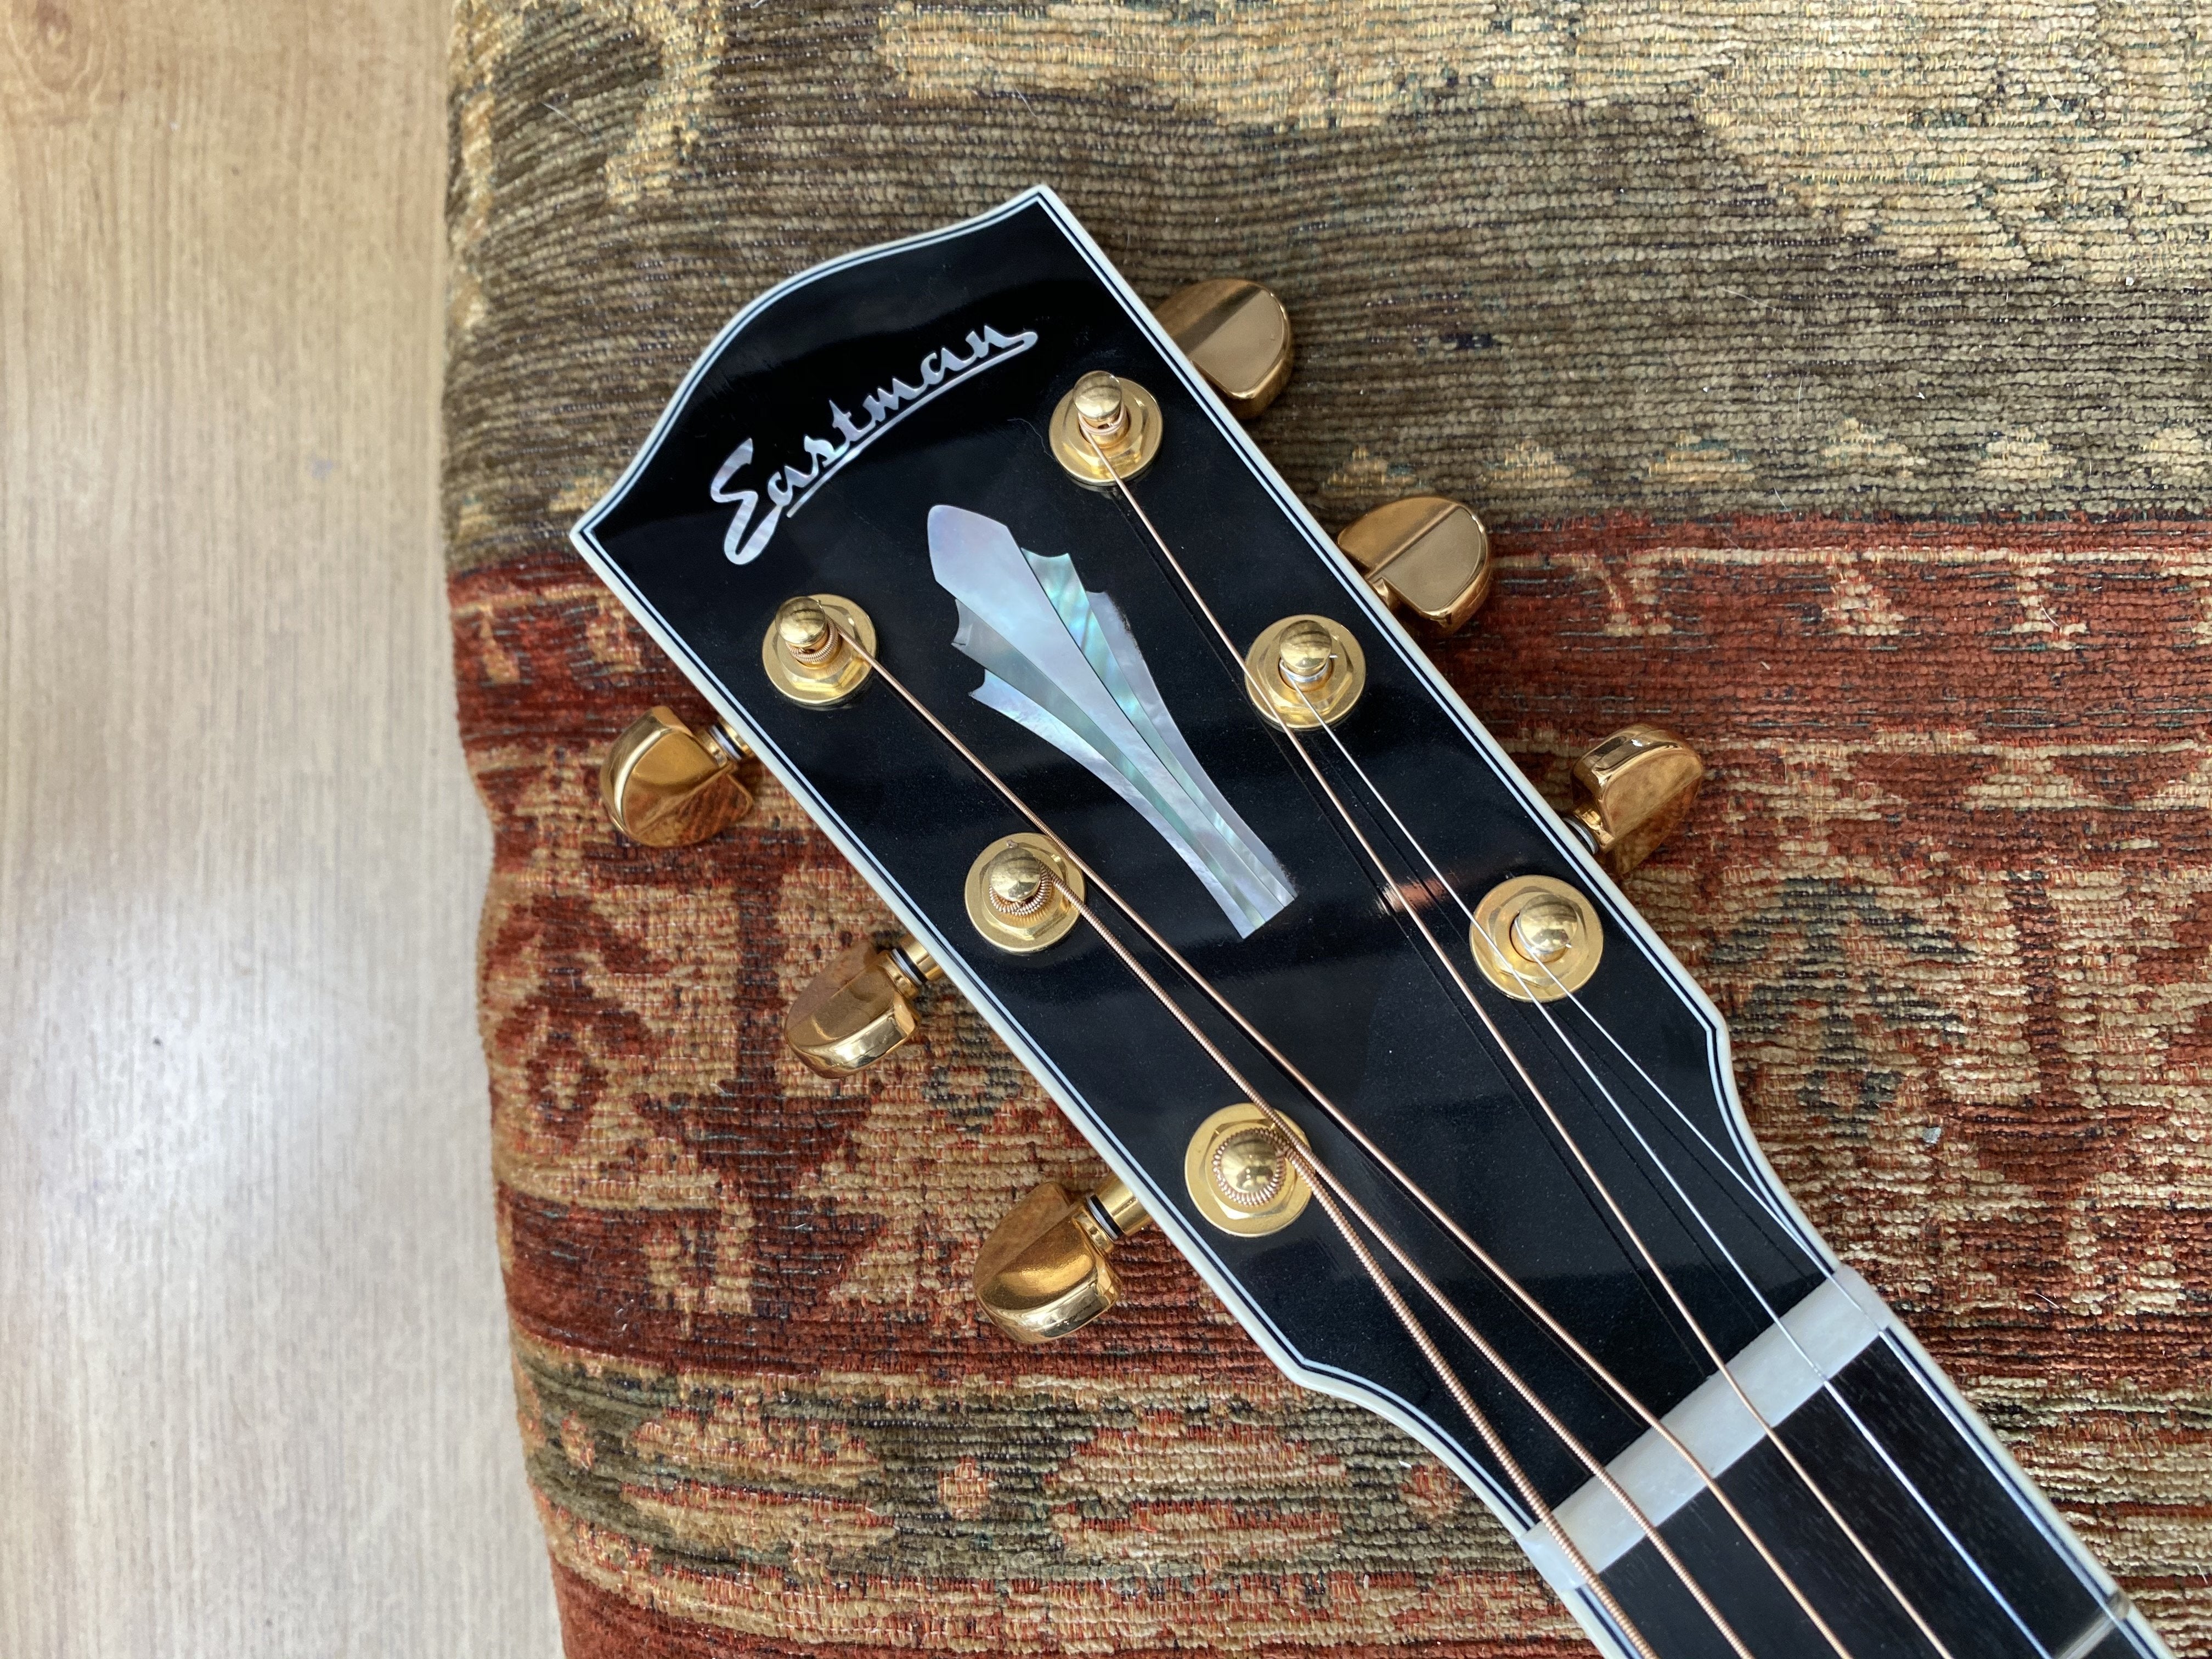 Eastman AC630-BD, Acoustic Guitar for sale at Richards Guitars.